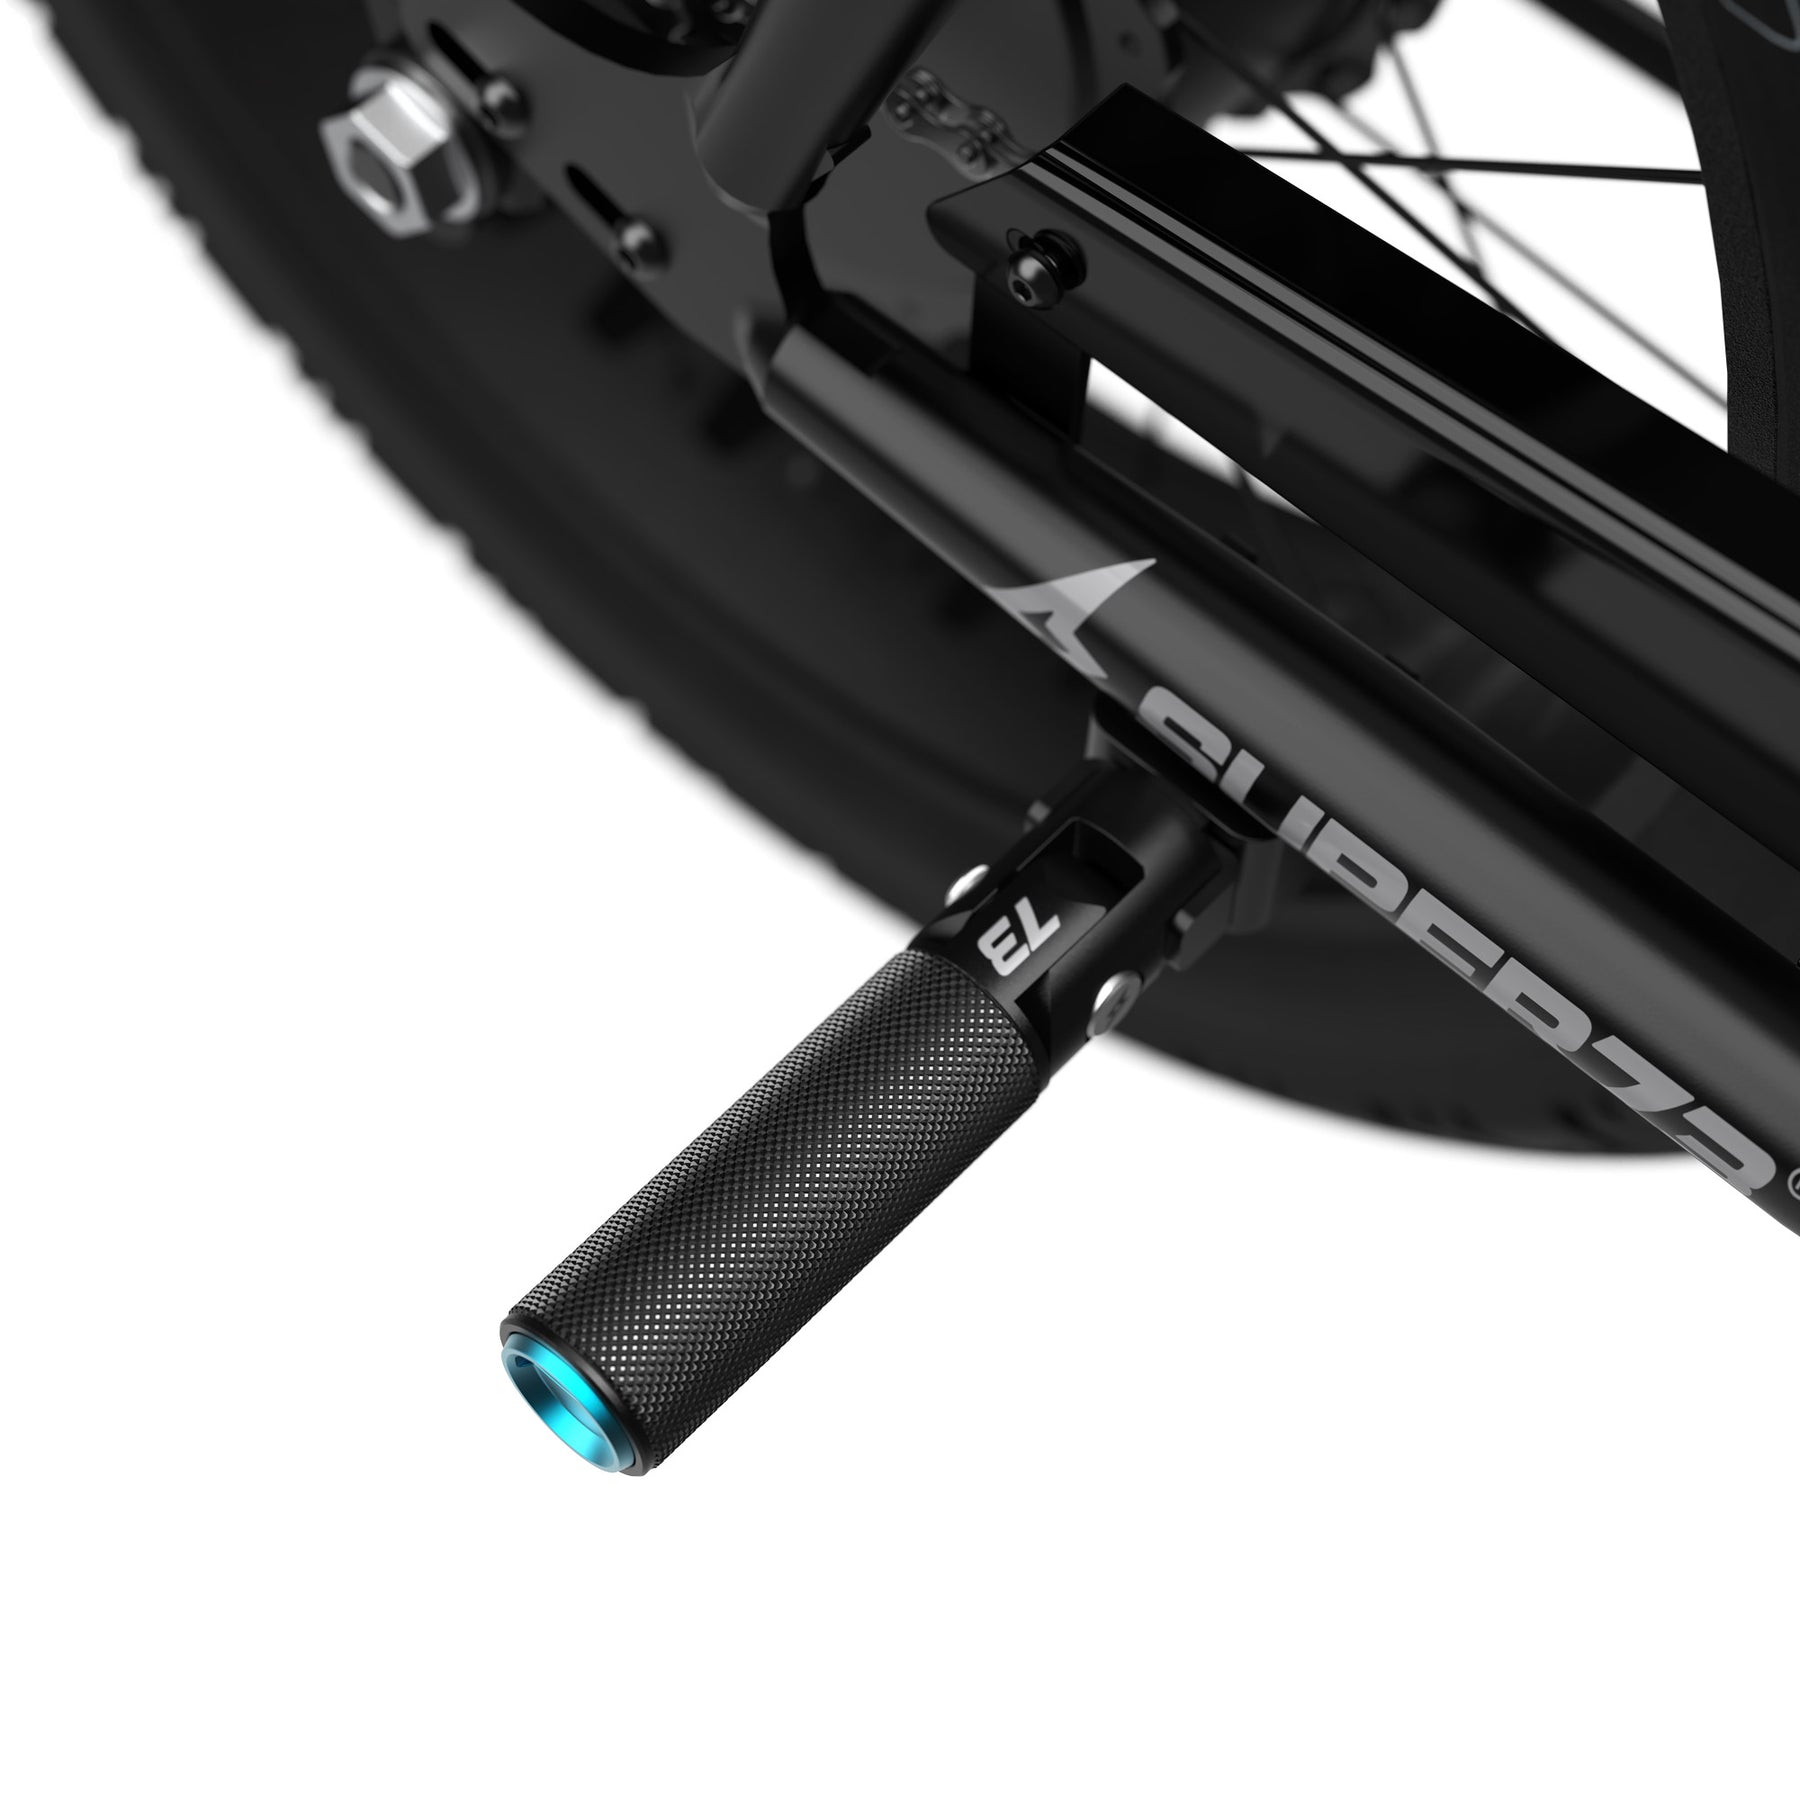 alternative view of Folding peg with blue cap on bike